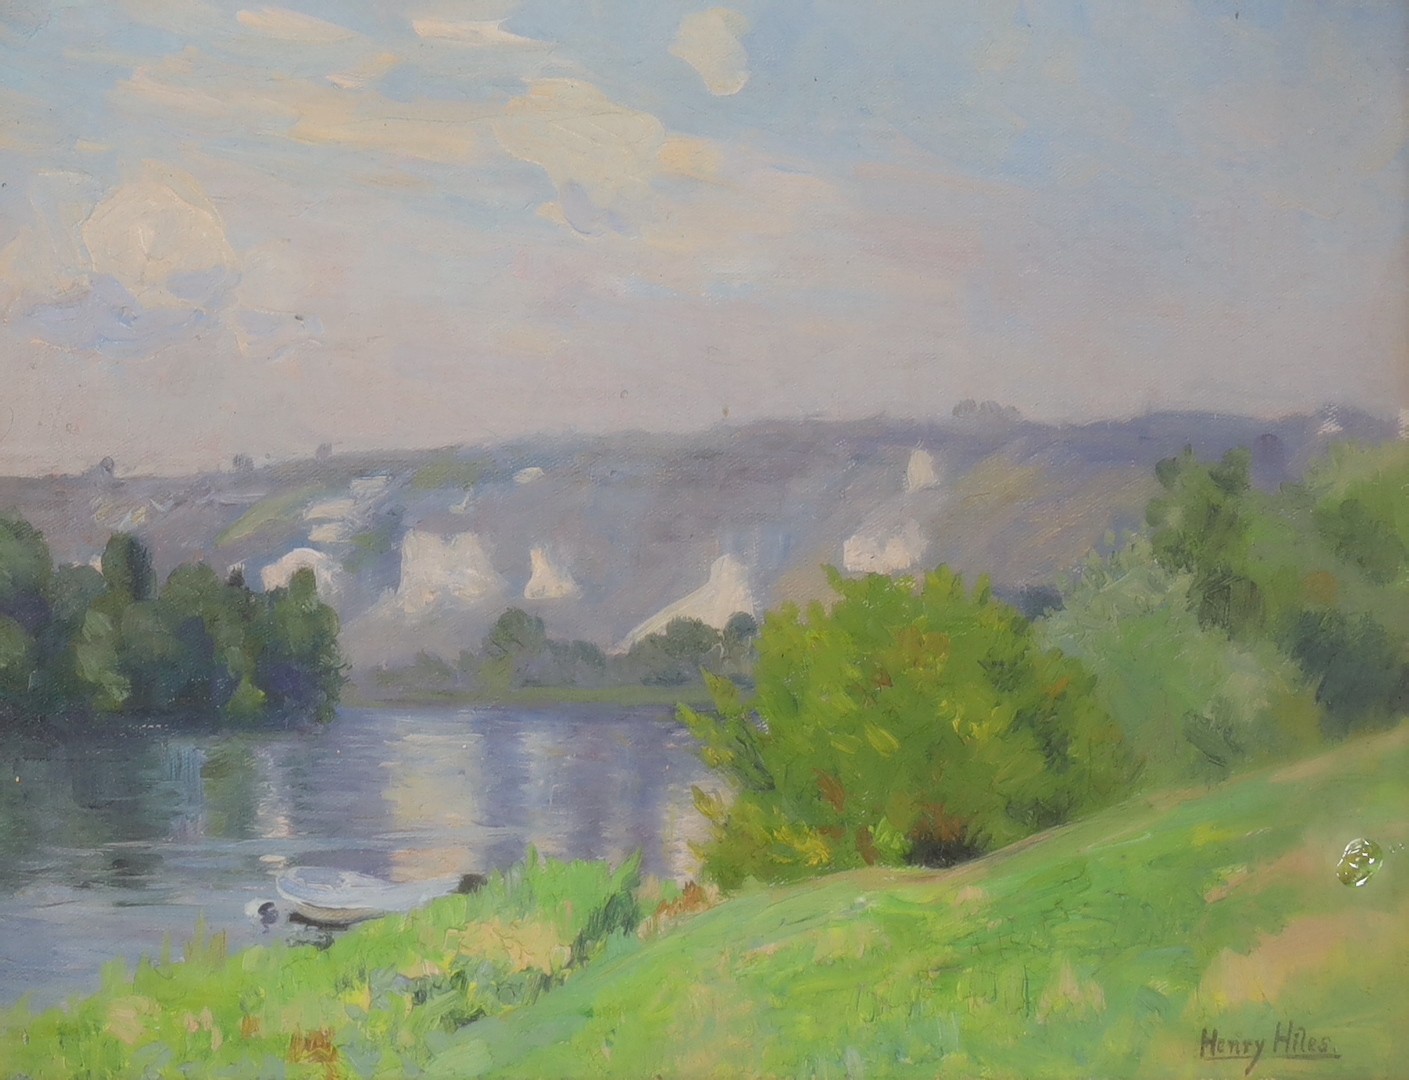 Henry Hiles (1857-1948), oil on canvas, River landscape, signed, 26 x 34cm